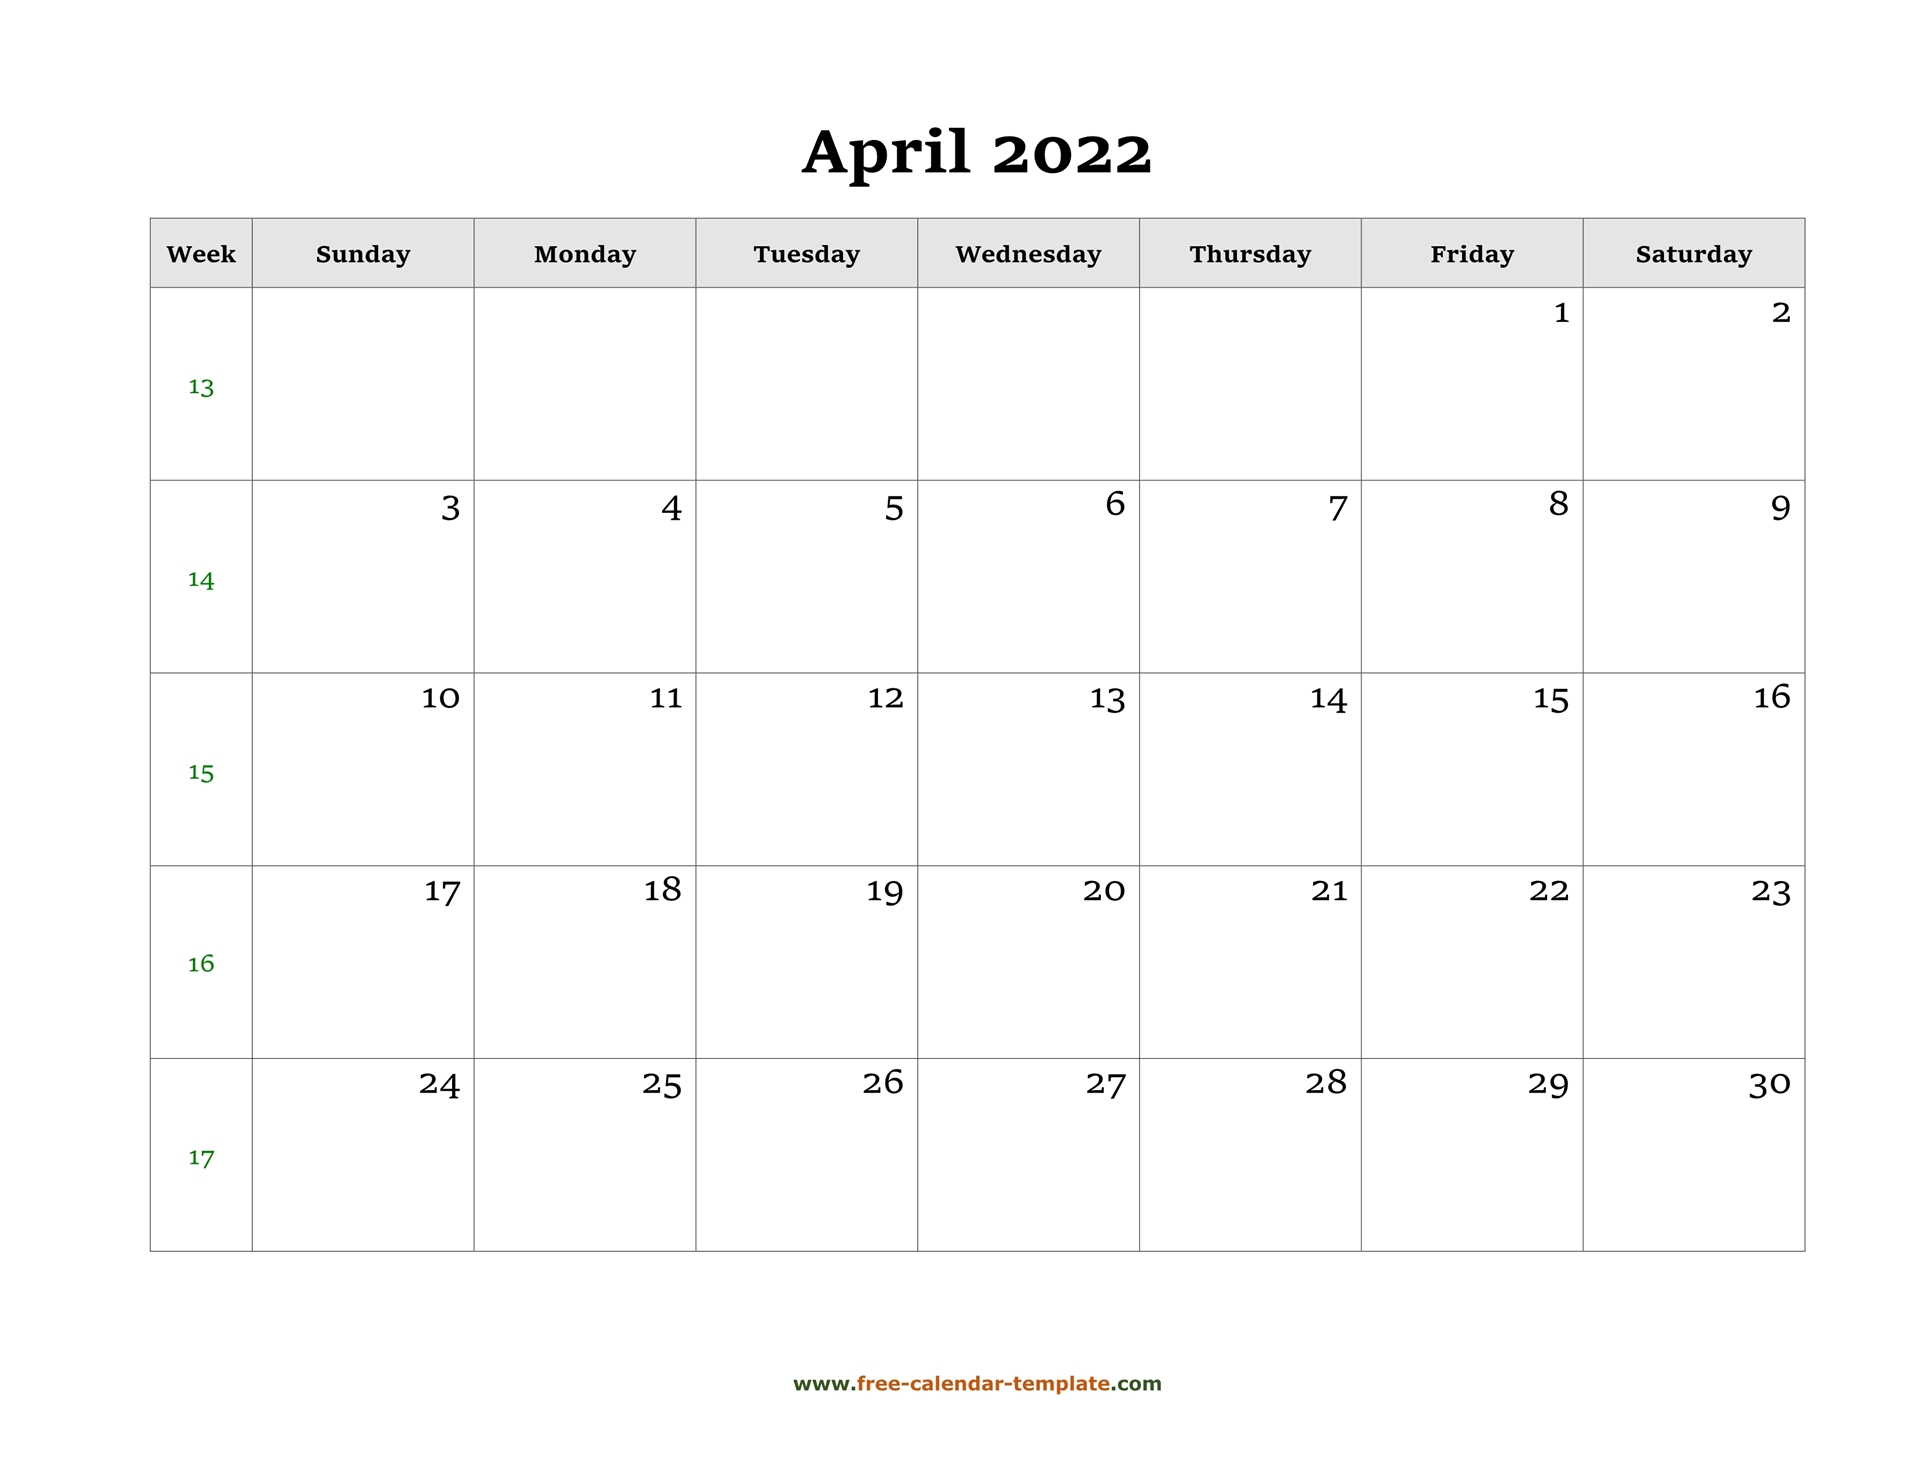 April 2022 Free Calendar Tempplate | Free-Calendar